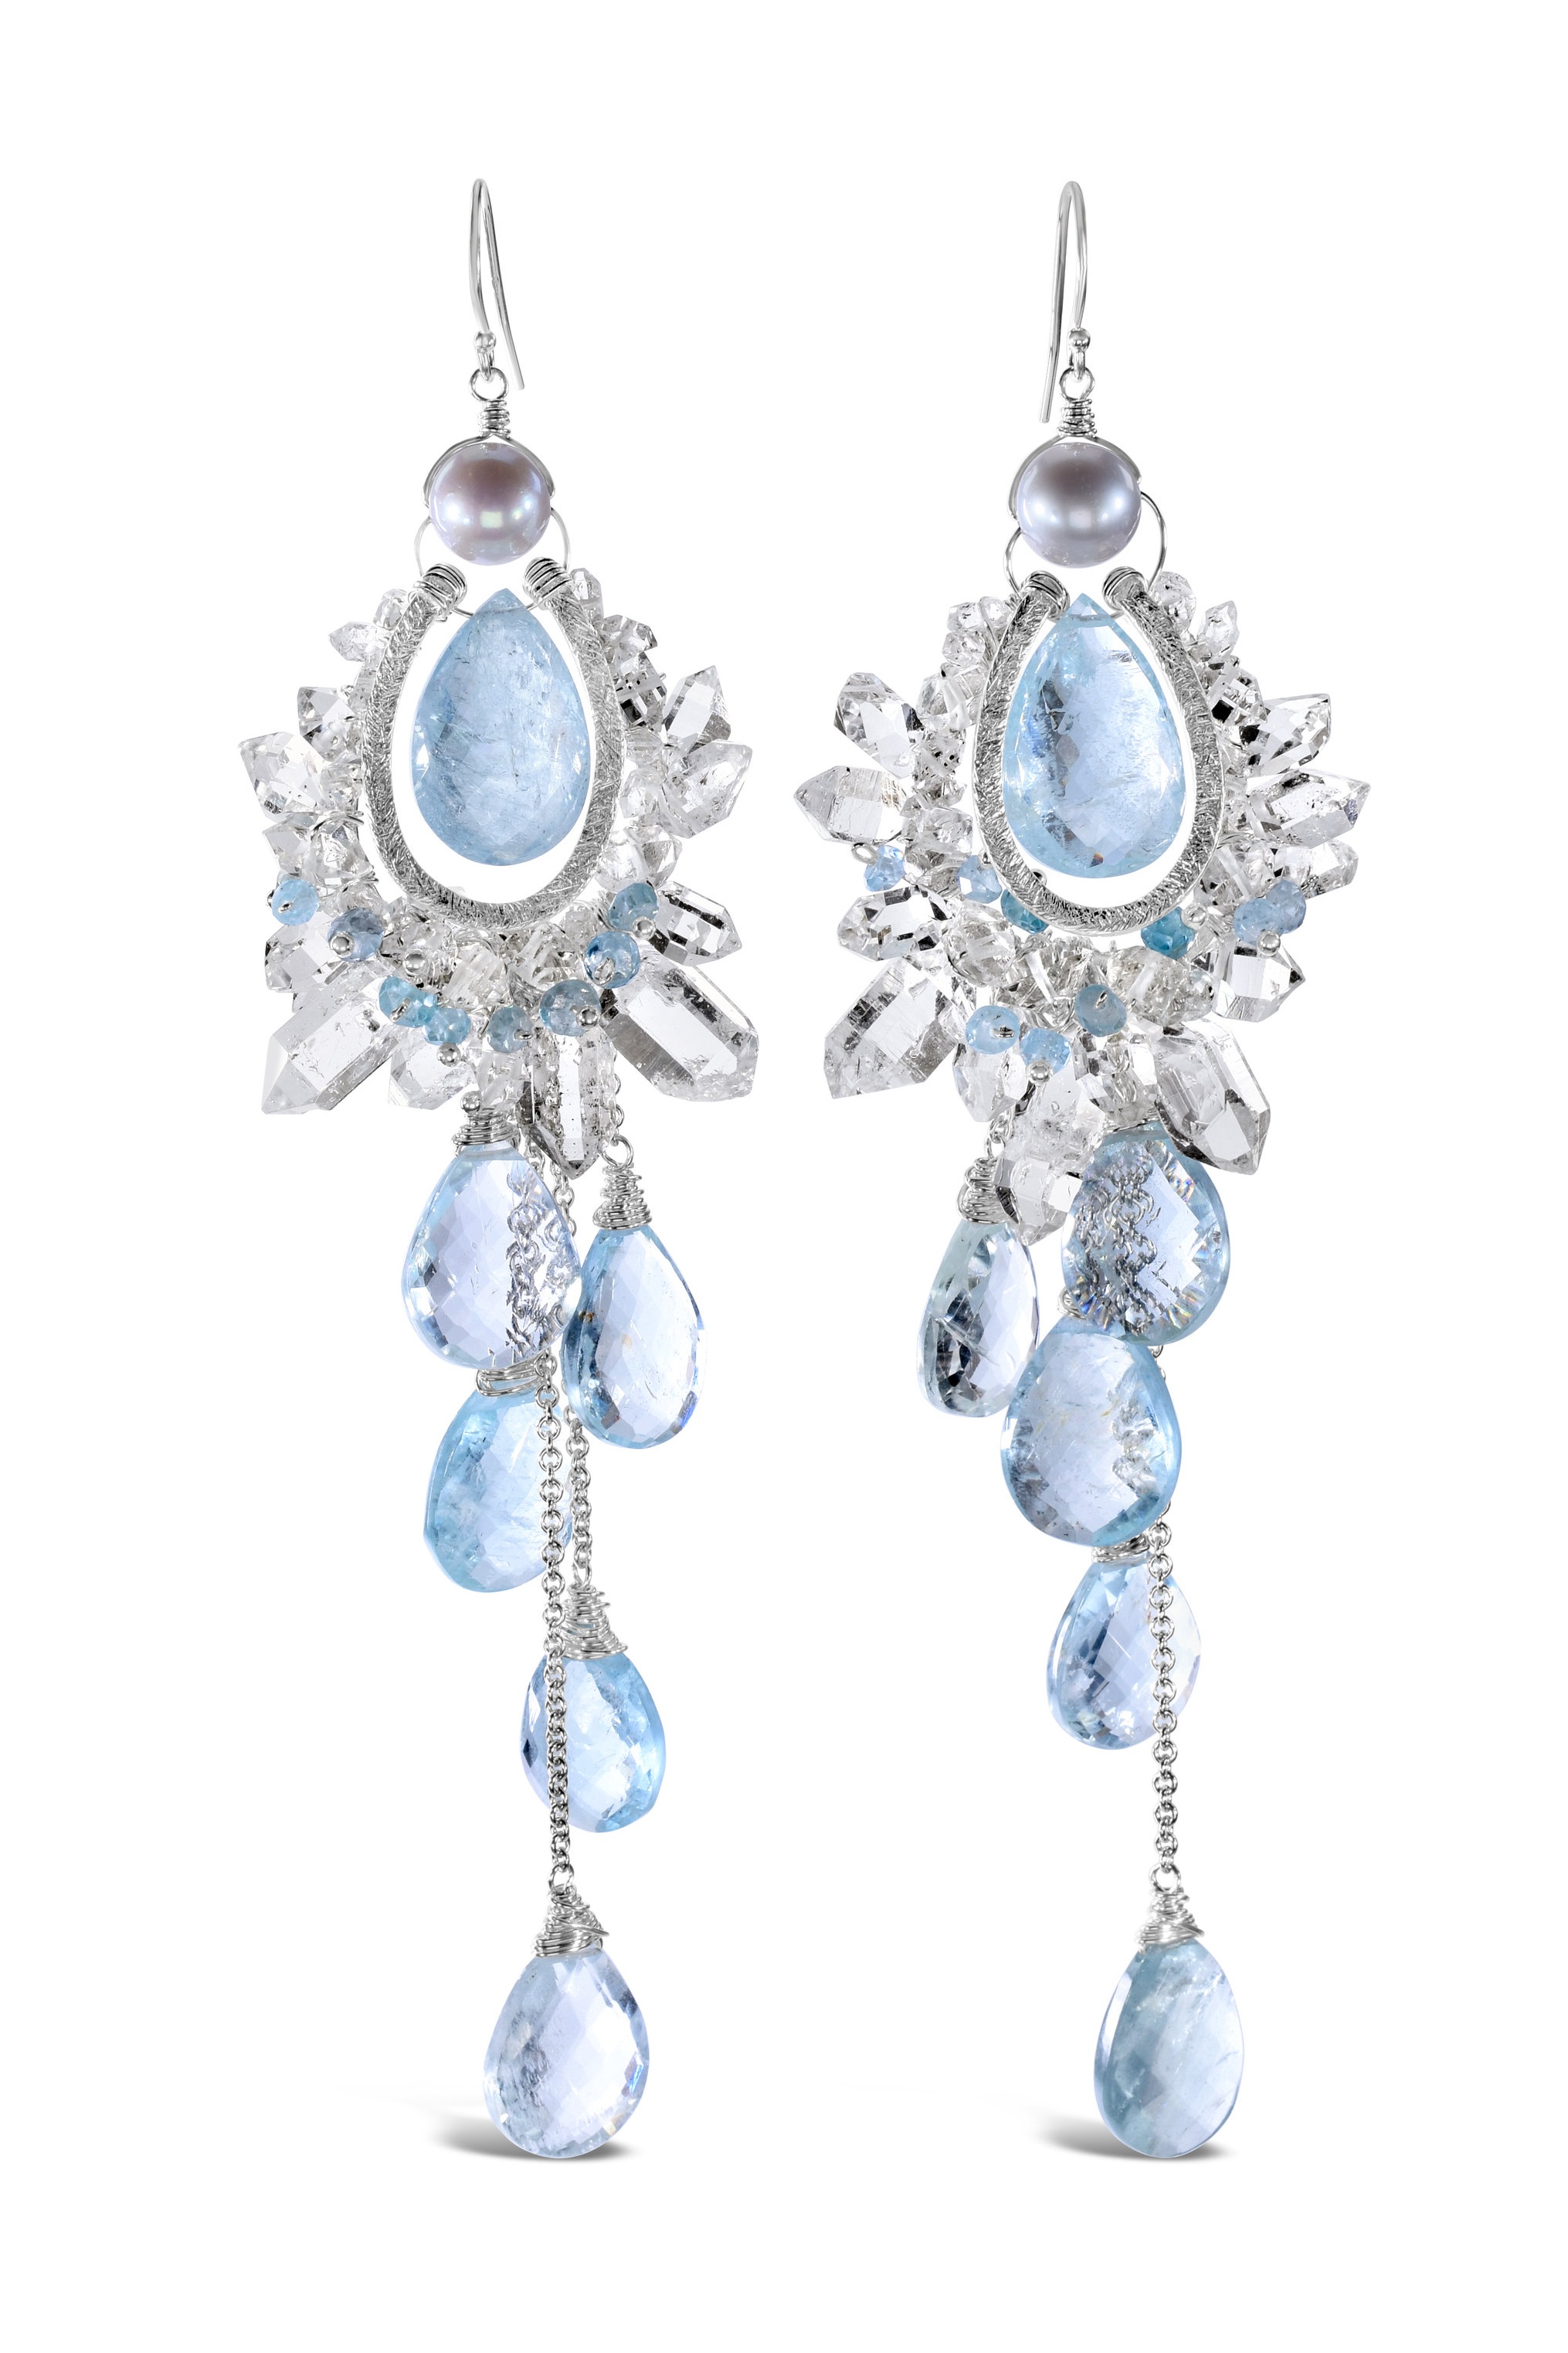 custom earrings made of herkimer diamonds and aquamarine